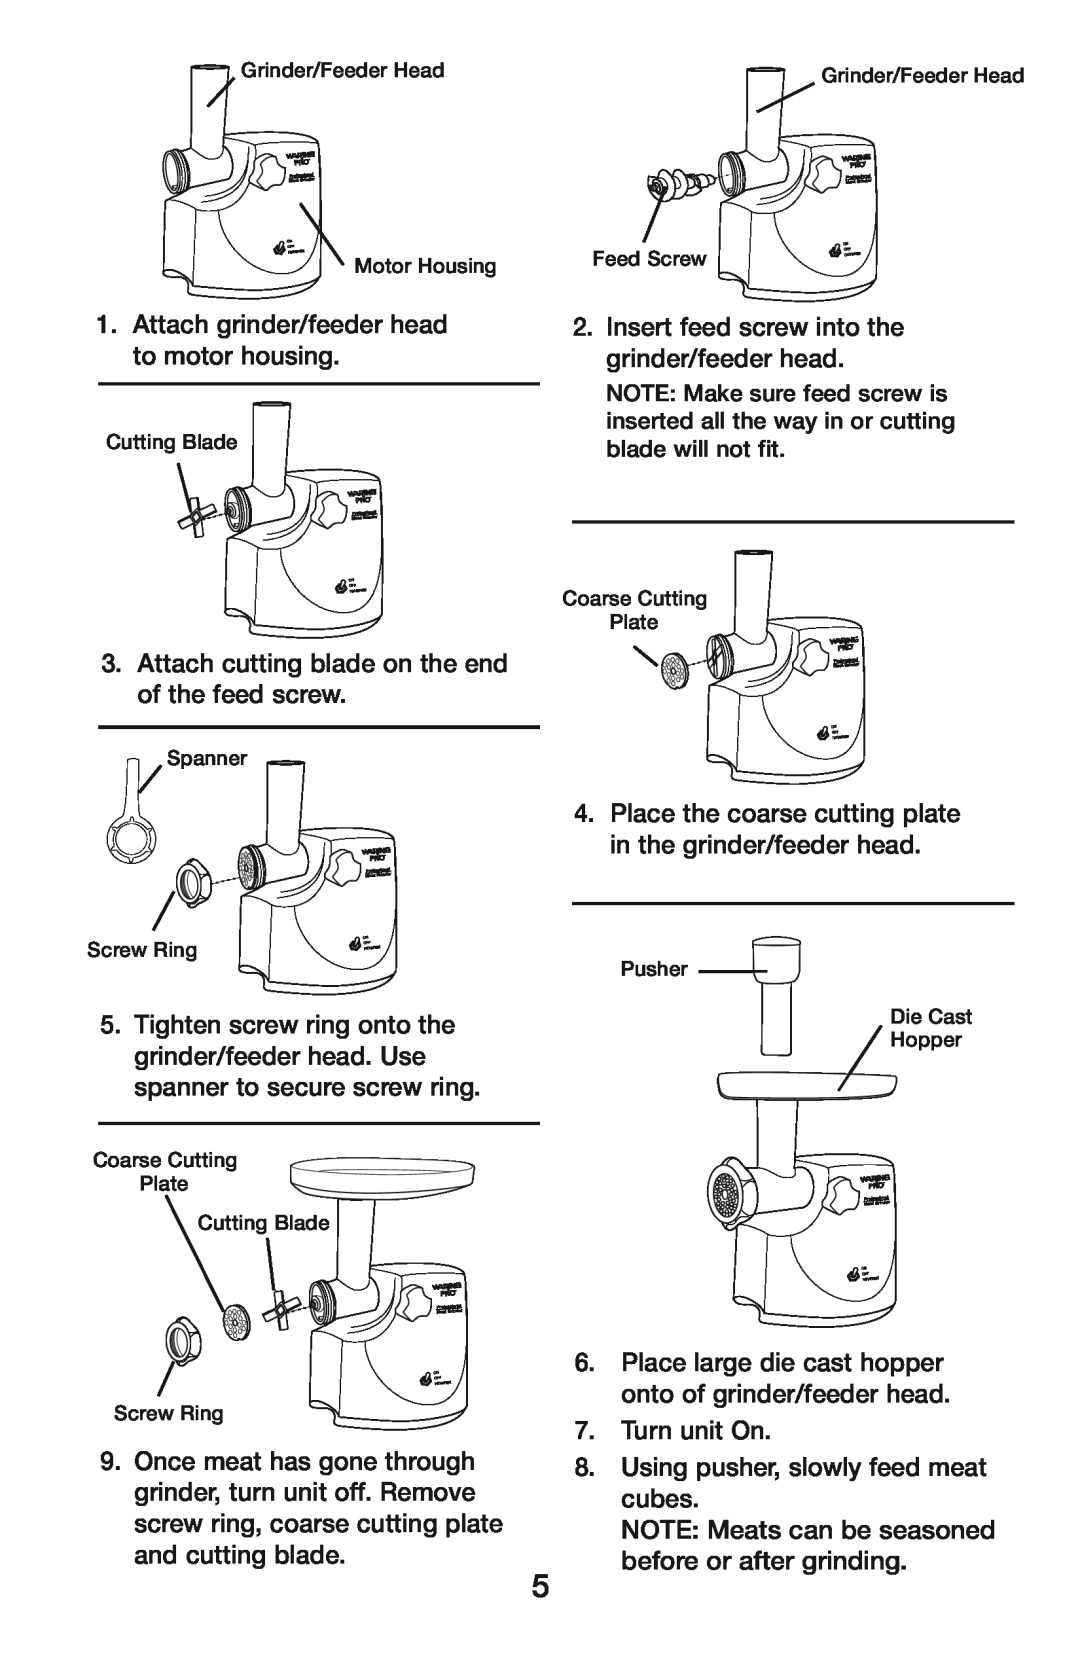 Waring MG800 manual Attach grinder/feeder head to motor housing 